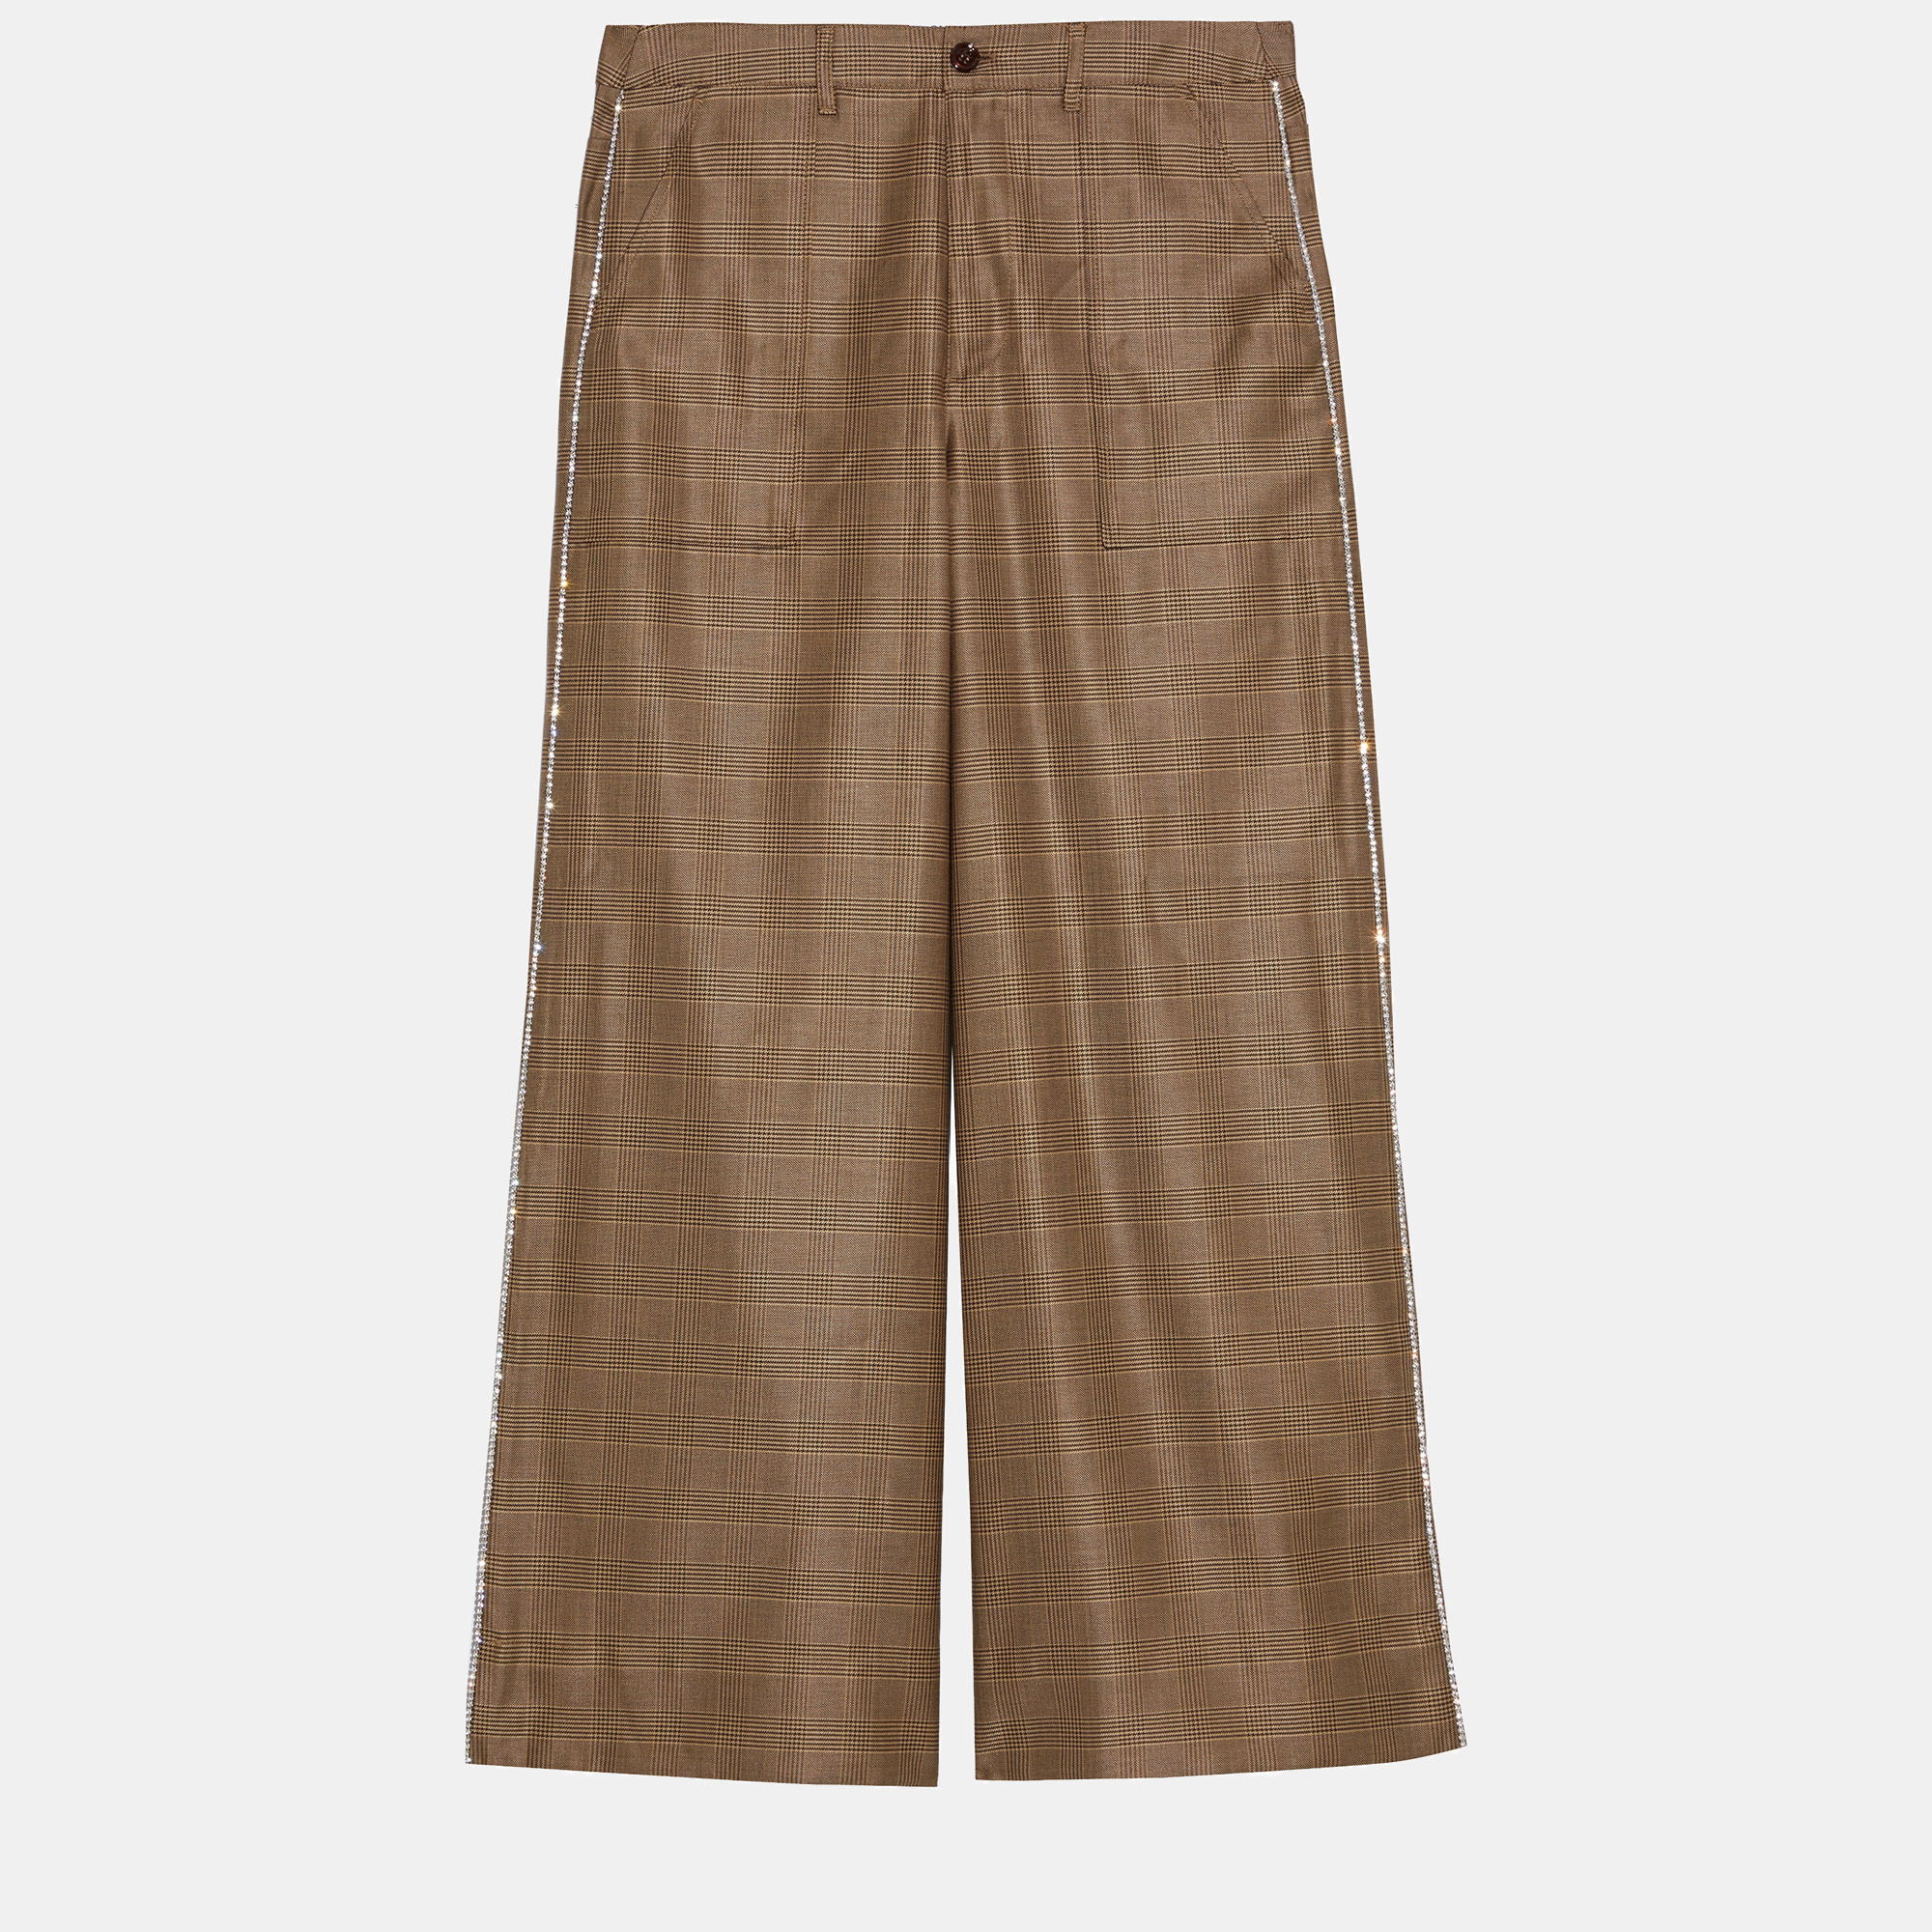 Ganni brown checked wool-blend wide leg pants m (eu 38)